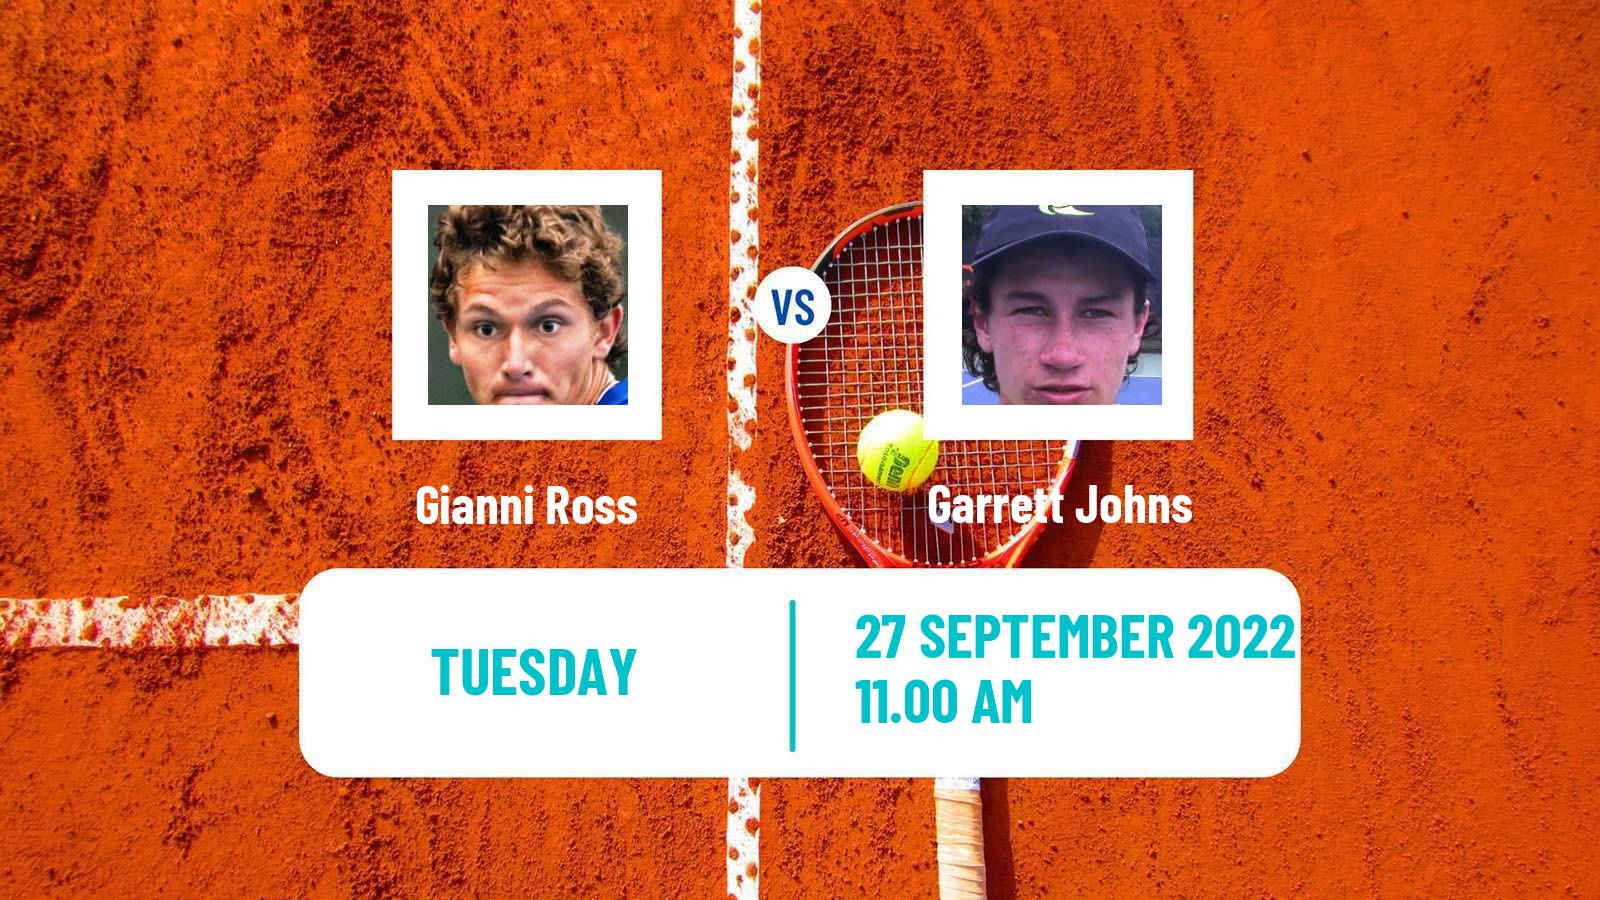 Tennis ATP Challenger Gianni Ross - Garrett Johns